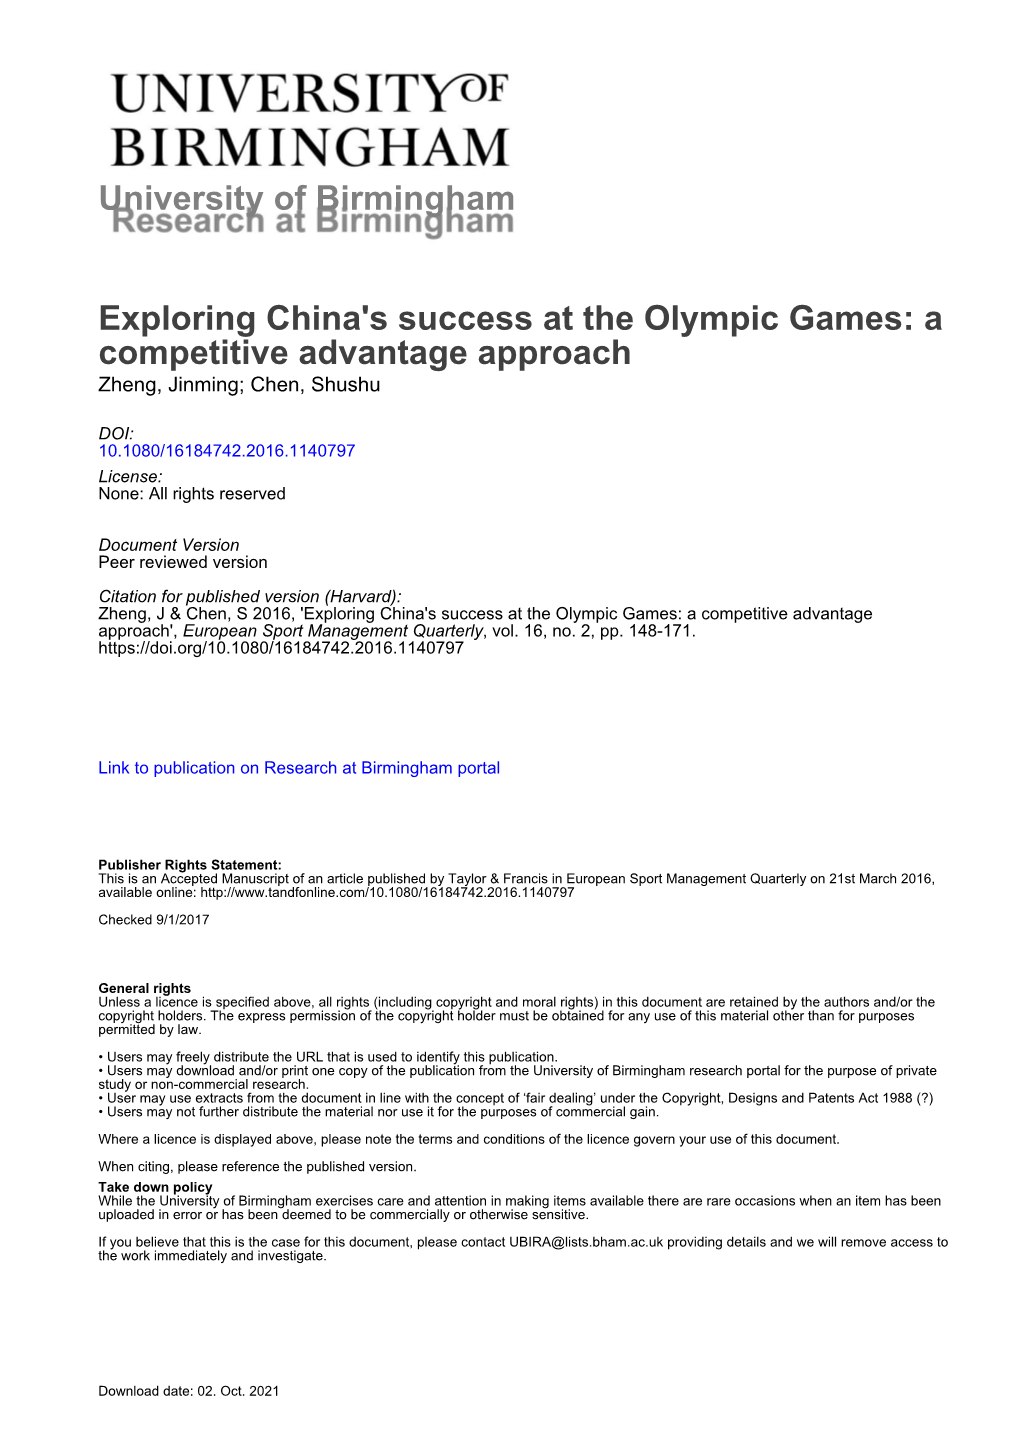 University of Birmingham Exploring China's Success at the Olympic